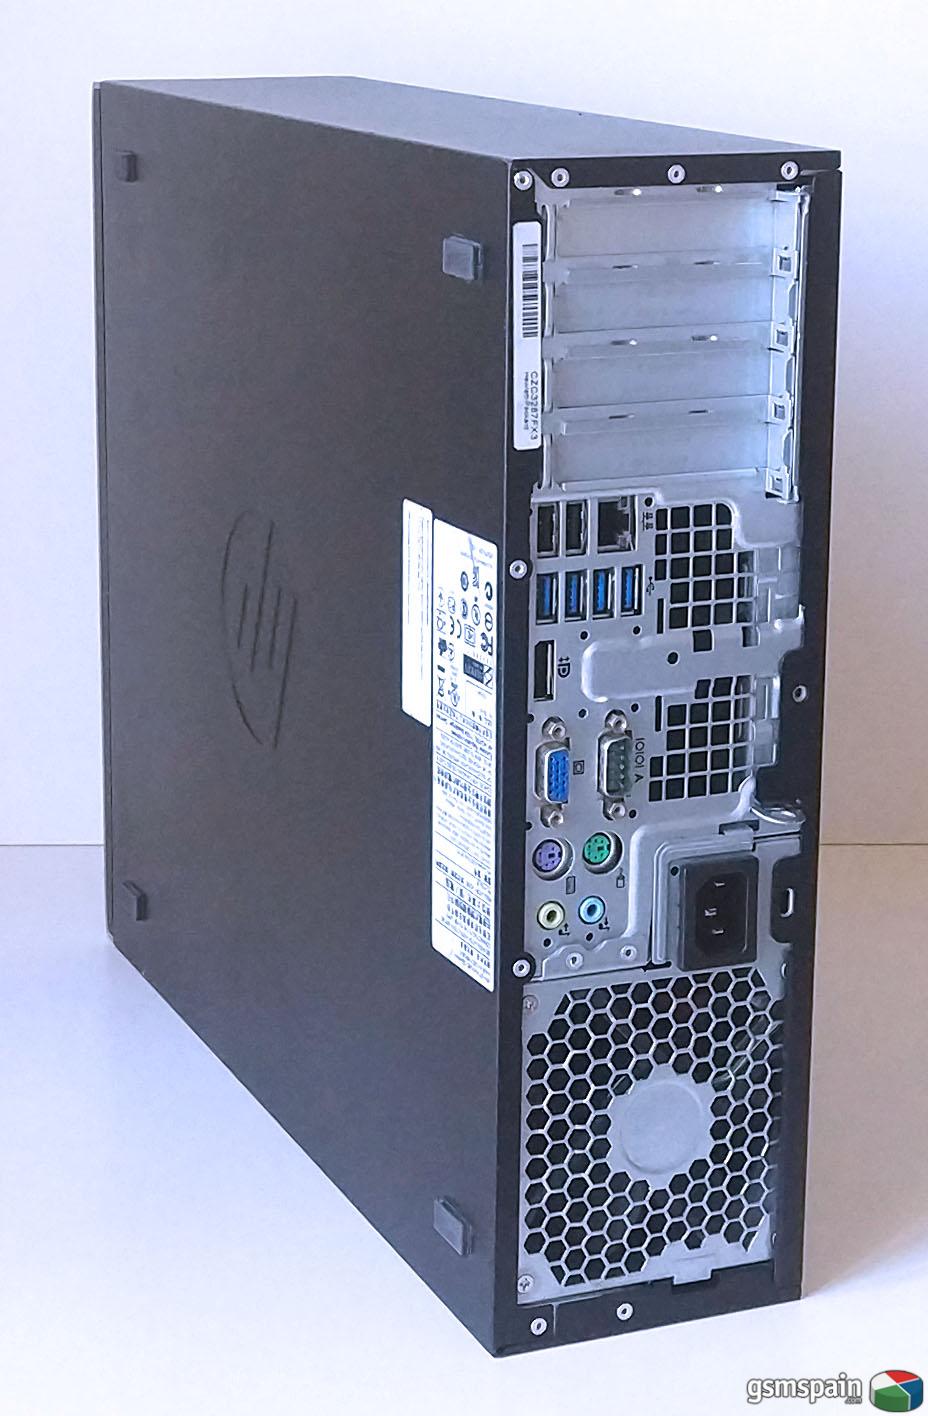 [VENDO] Ordenador HP Compaq Elite 8300 Sff - i5